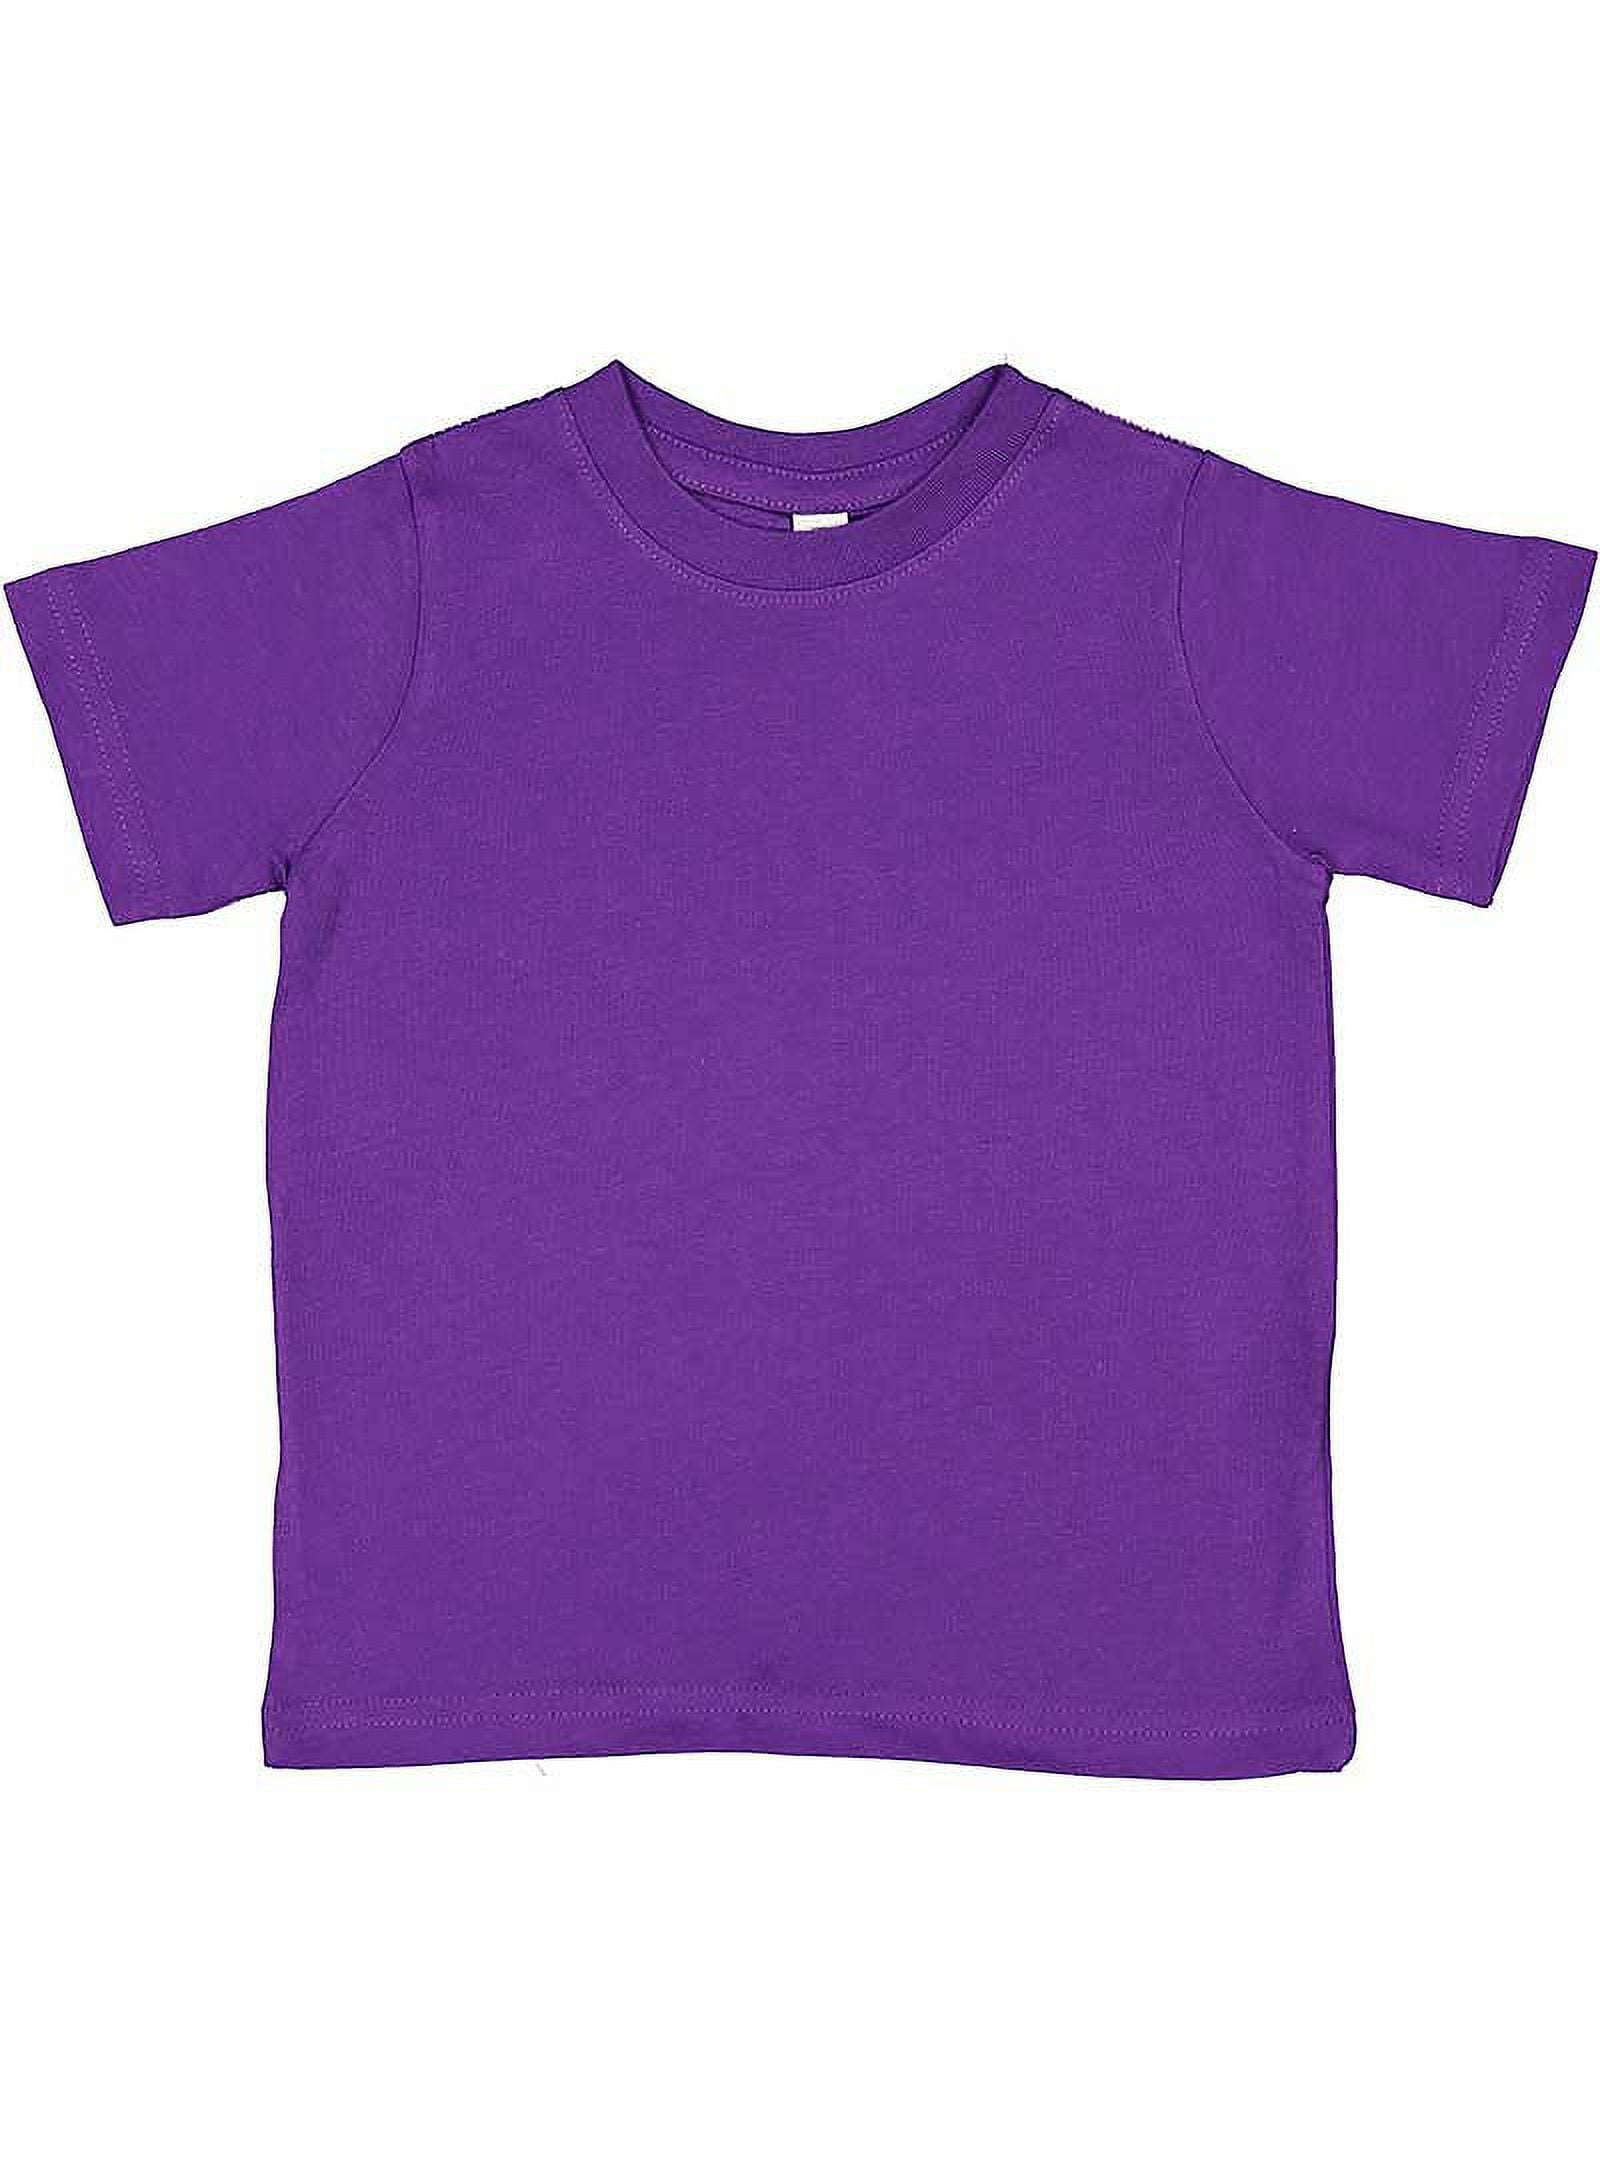 PURPLE Jersey 2T T-Shirt Toddler Fine PRO